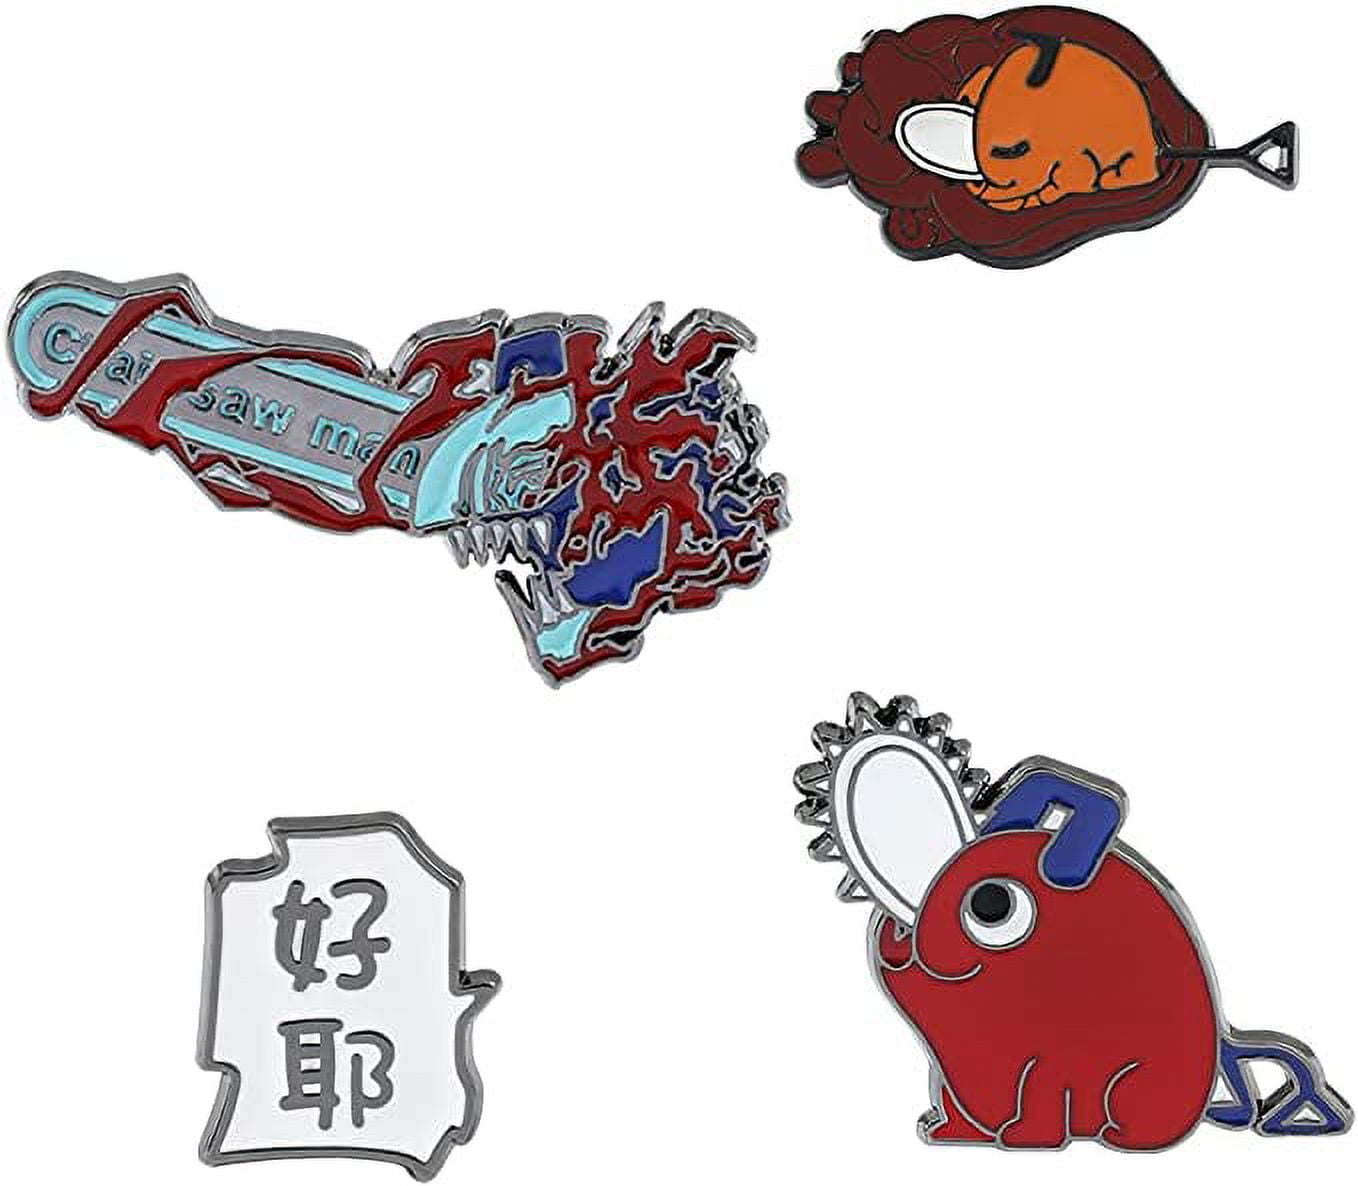 Hot Manga Anime Chainsaw Man Keychain Cosplay Kawaii Figures Pochita Power  Angel Metal chain Pendant Charm Key Chain Llaveros